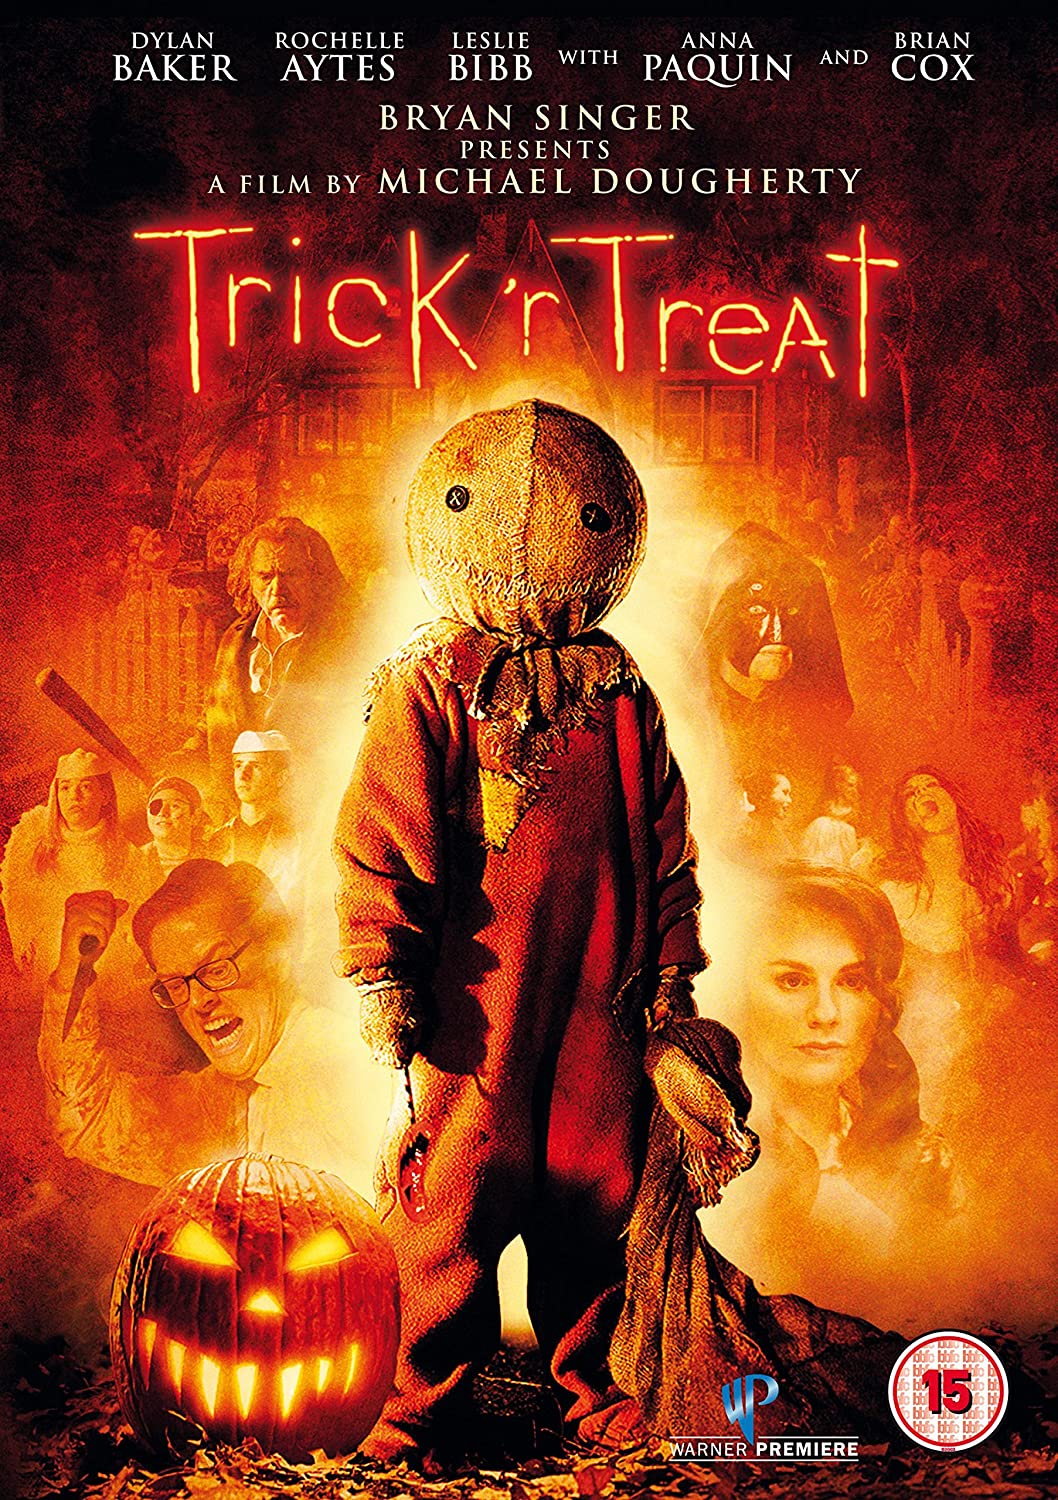 Trick 'r Treat [2007] - Horror/Thriller [DVD]